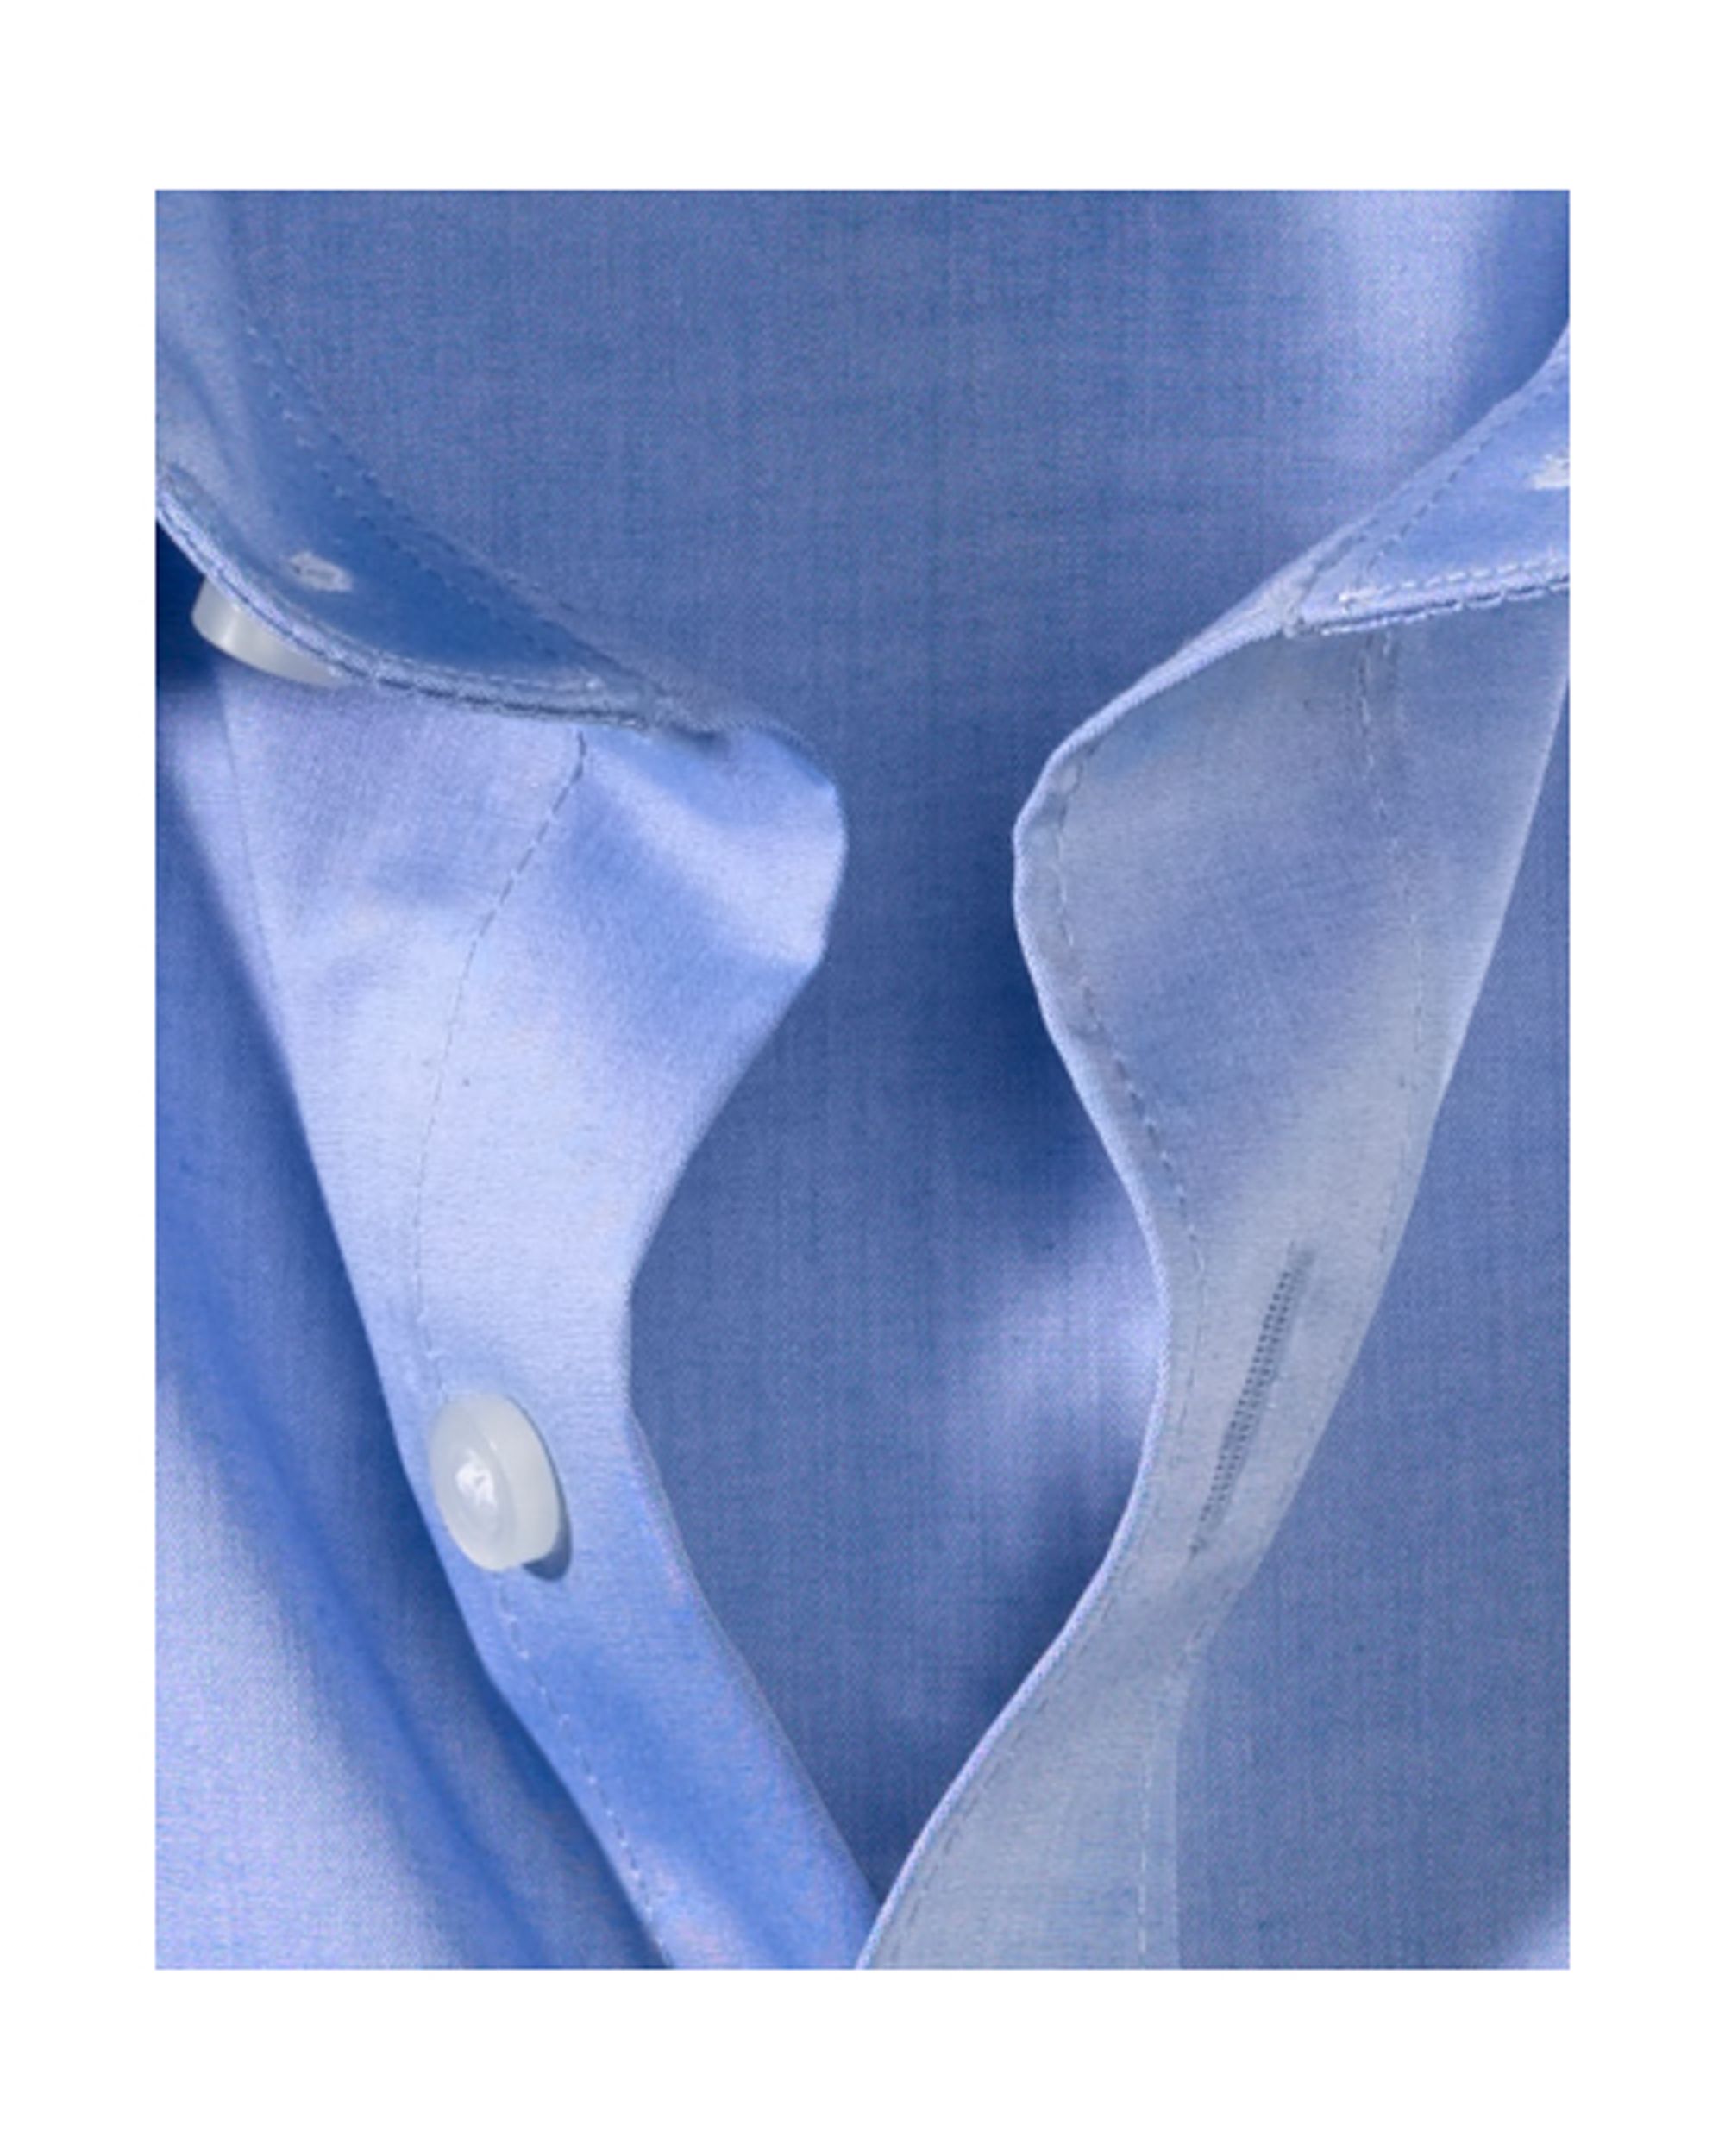 OLYMP Overhemd LM Blauw 011545-32-38